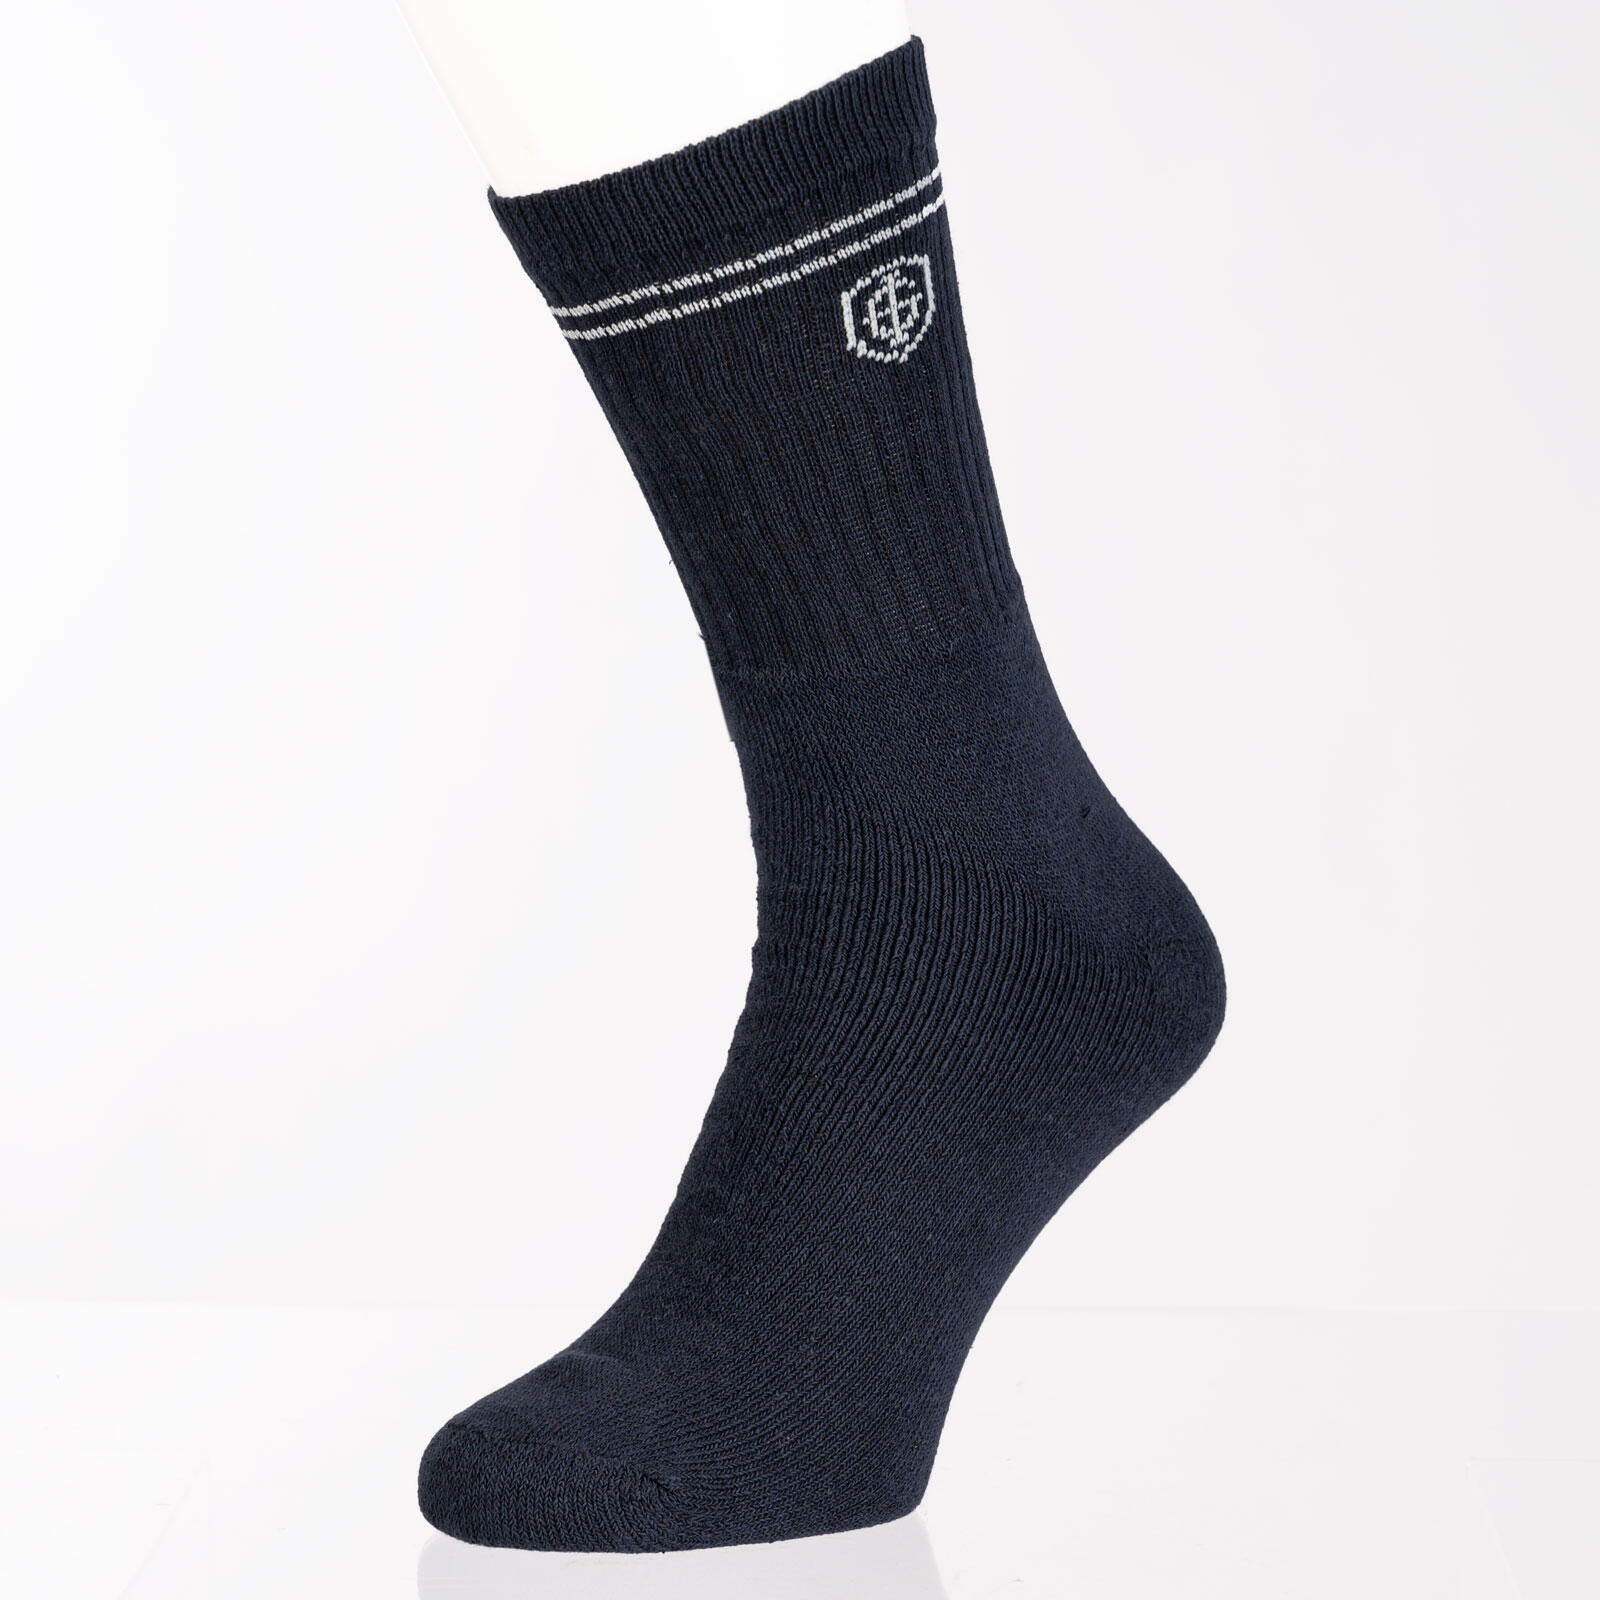 Mens Double Striped Socks 2/7